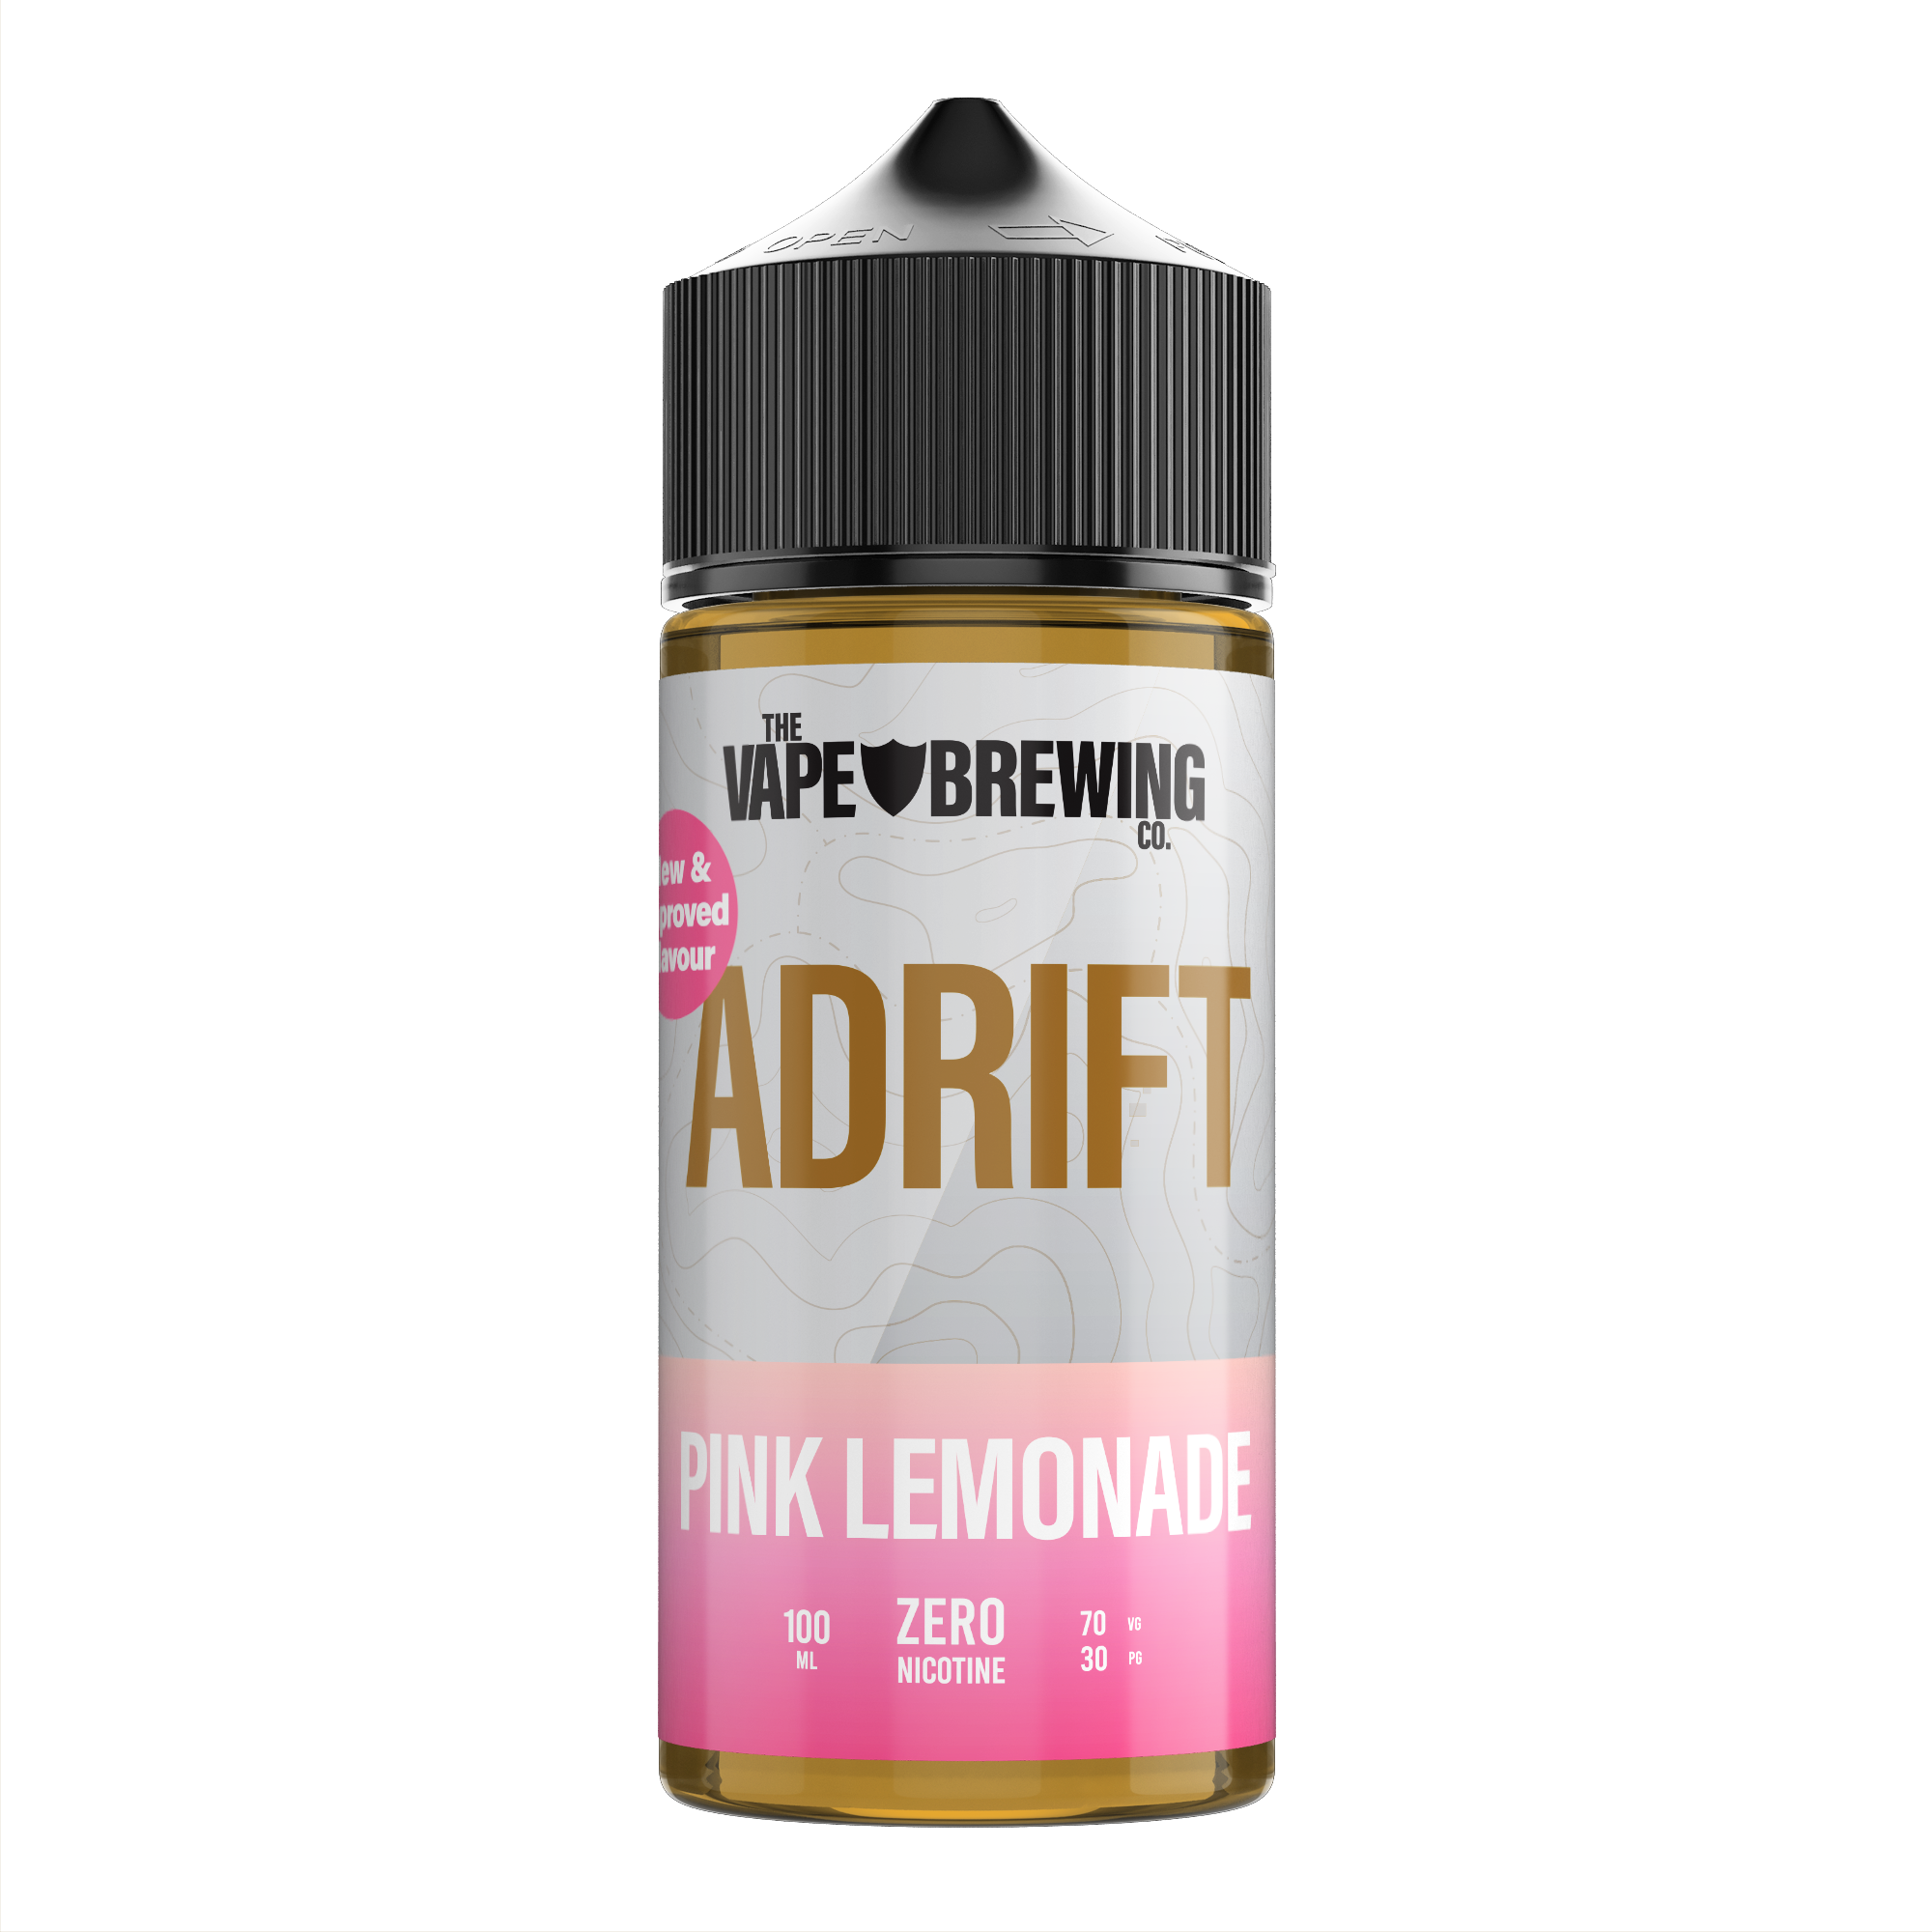 Pink Lemonade 100ml Shortfill by Adrift Vape Brewing Co.